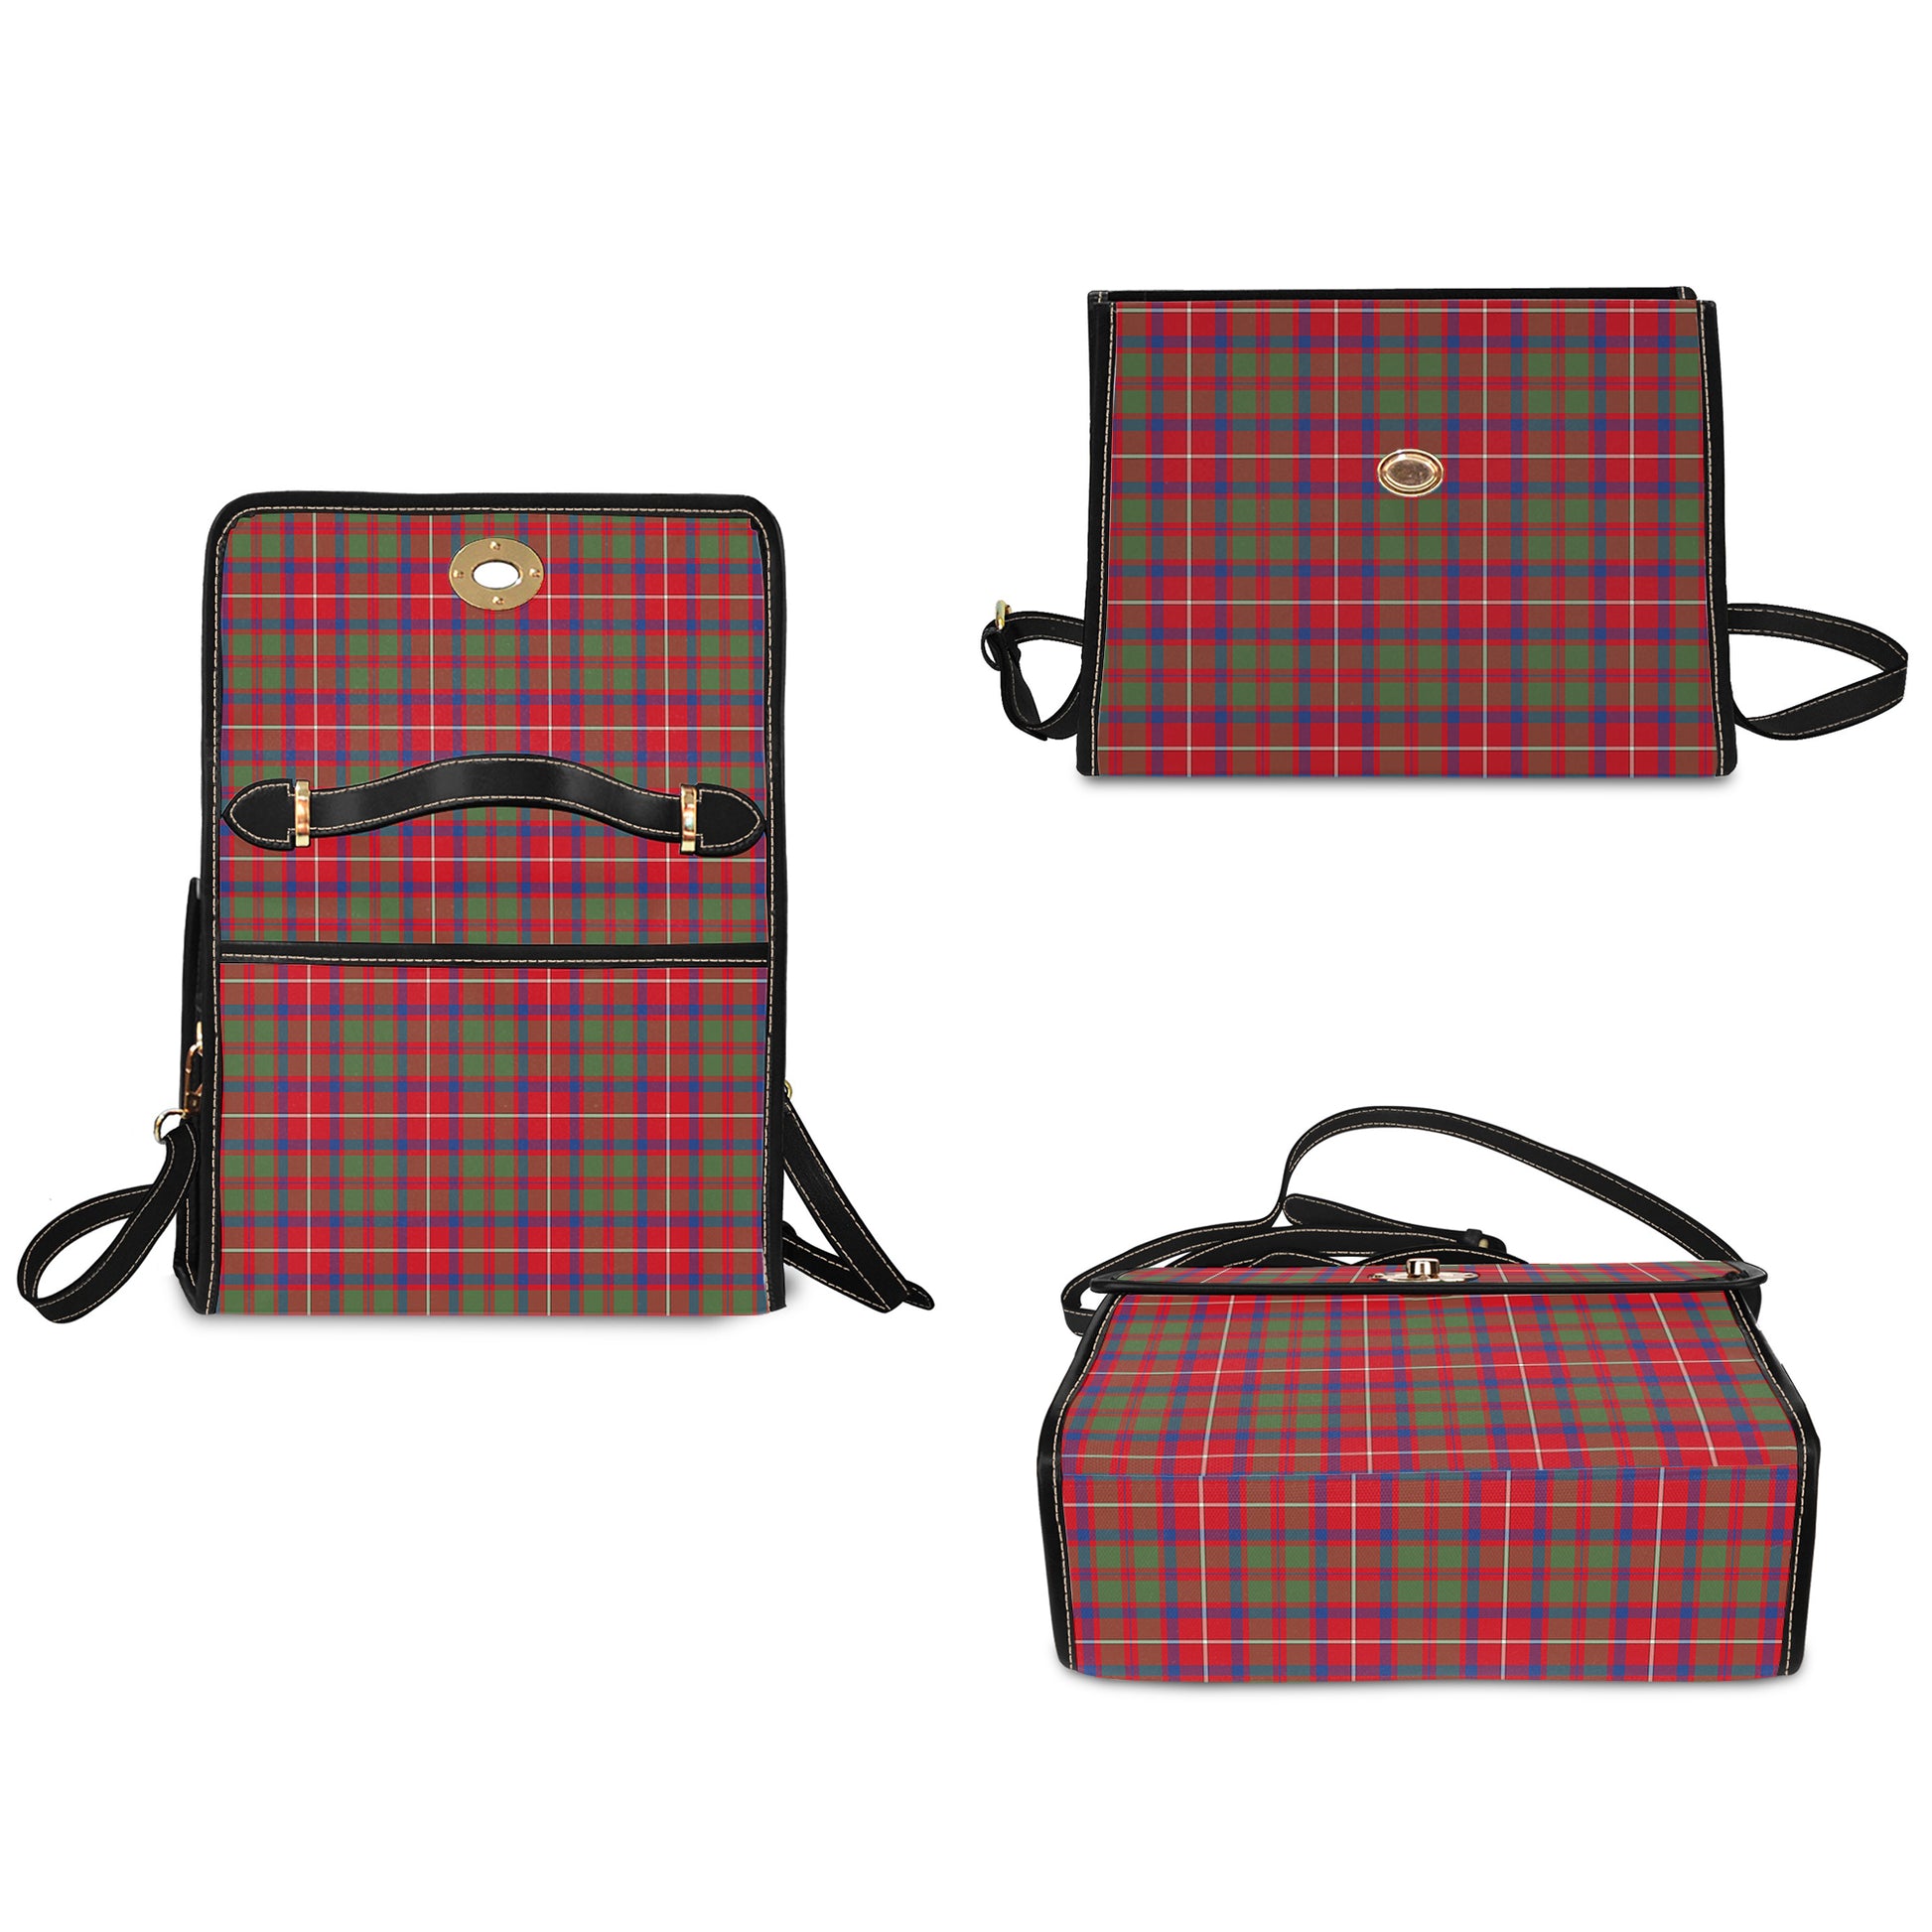 shaw-red-modern-tartan-leather-strap-waterproof-canvas-bag